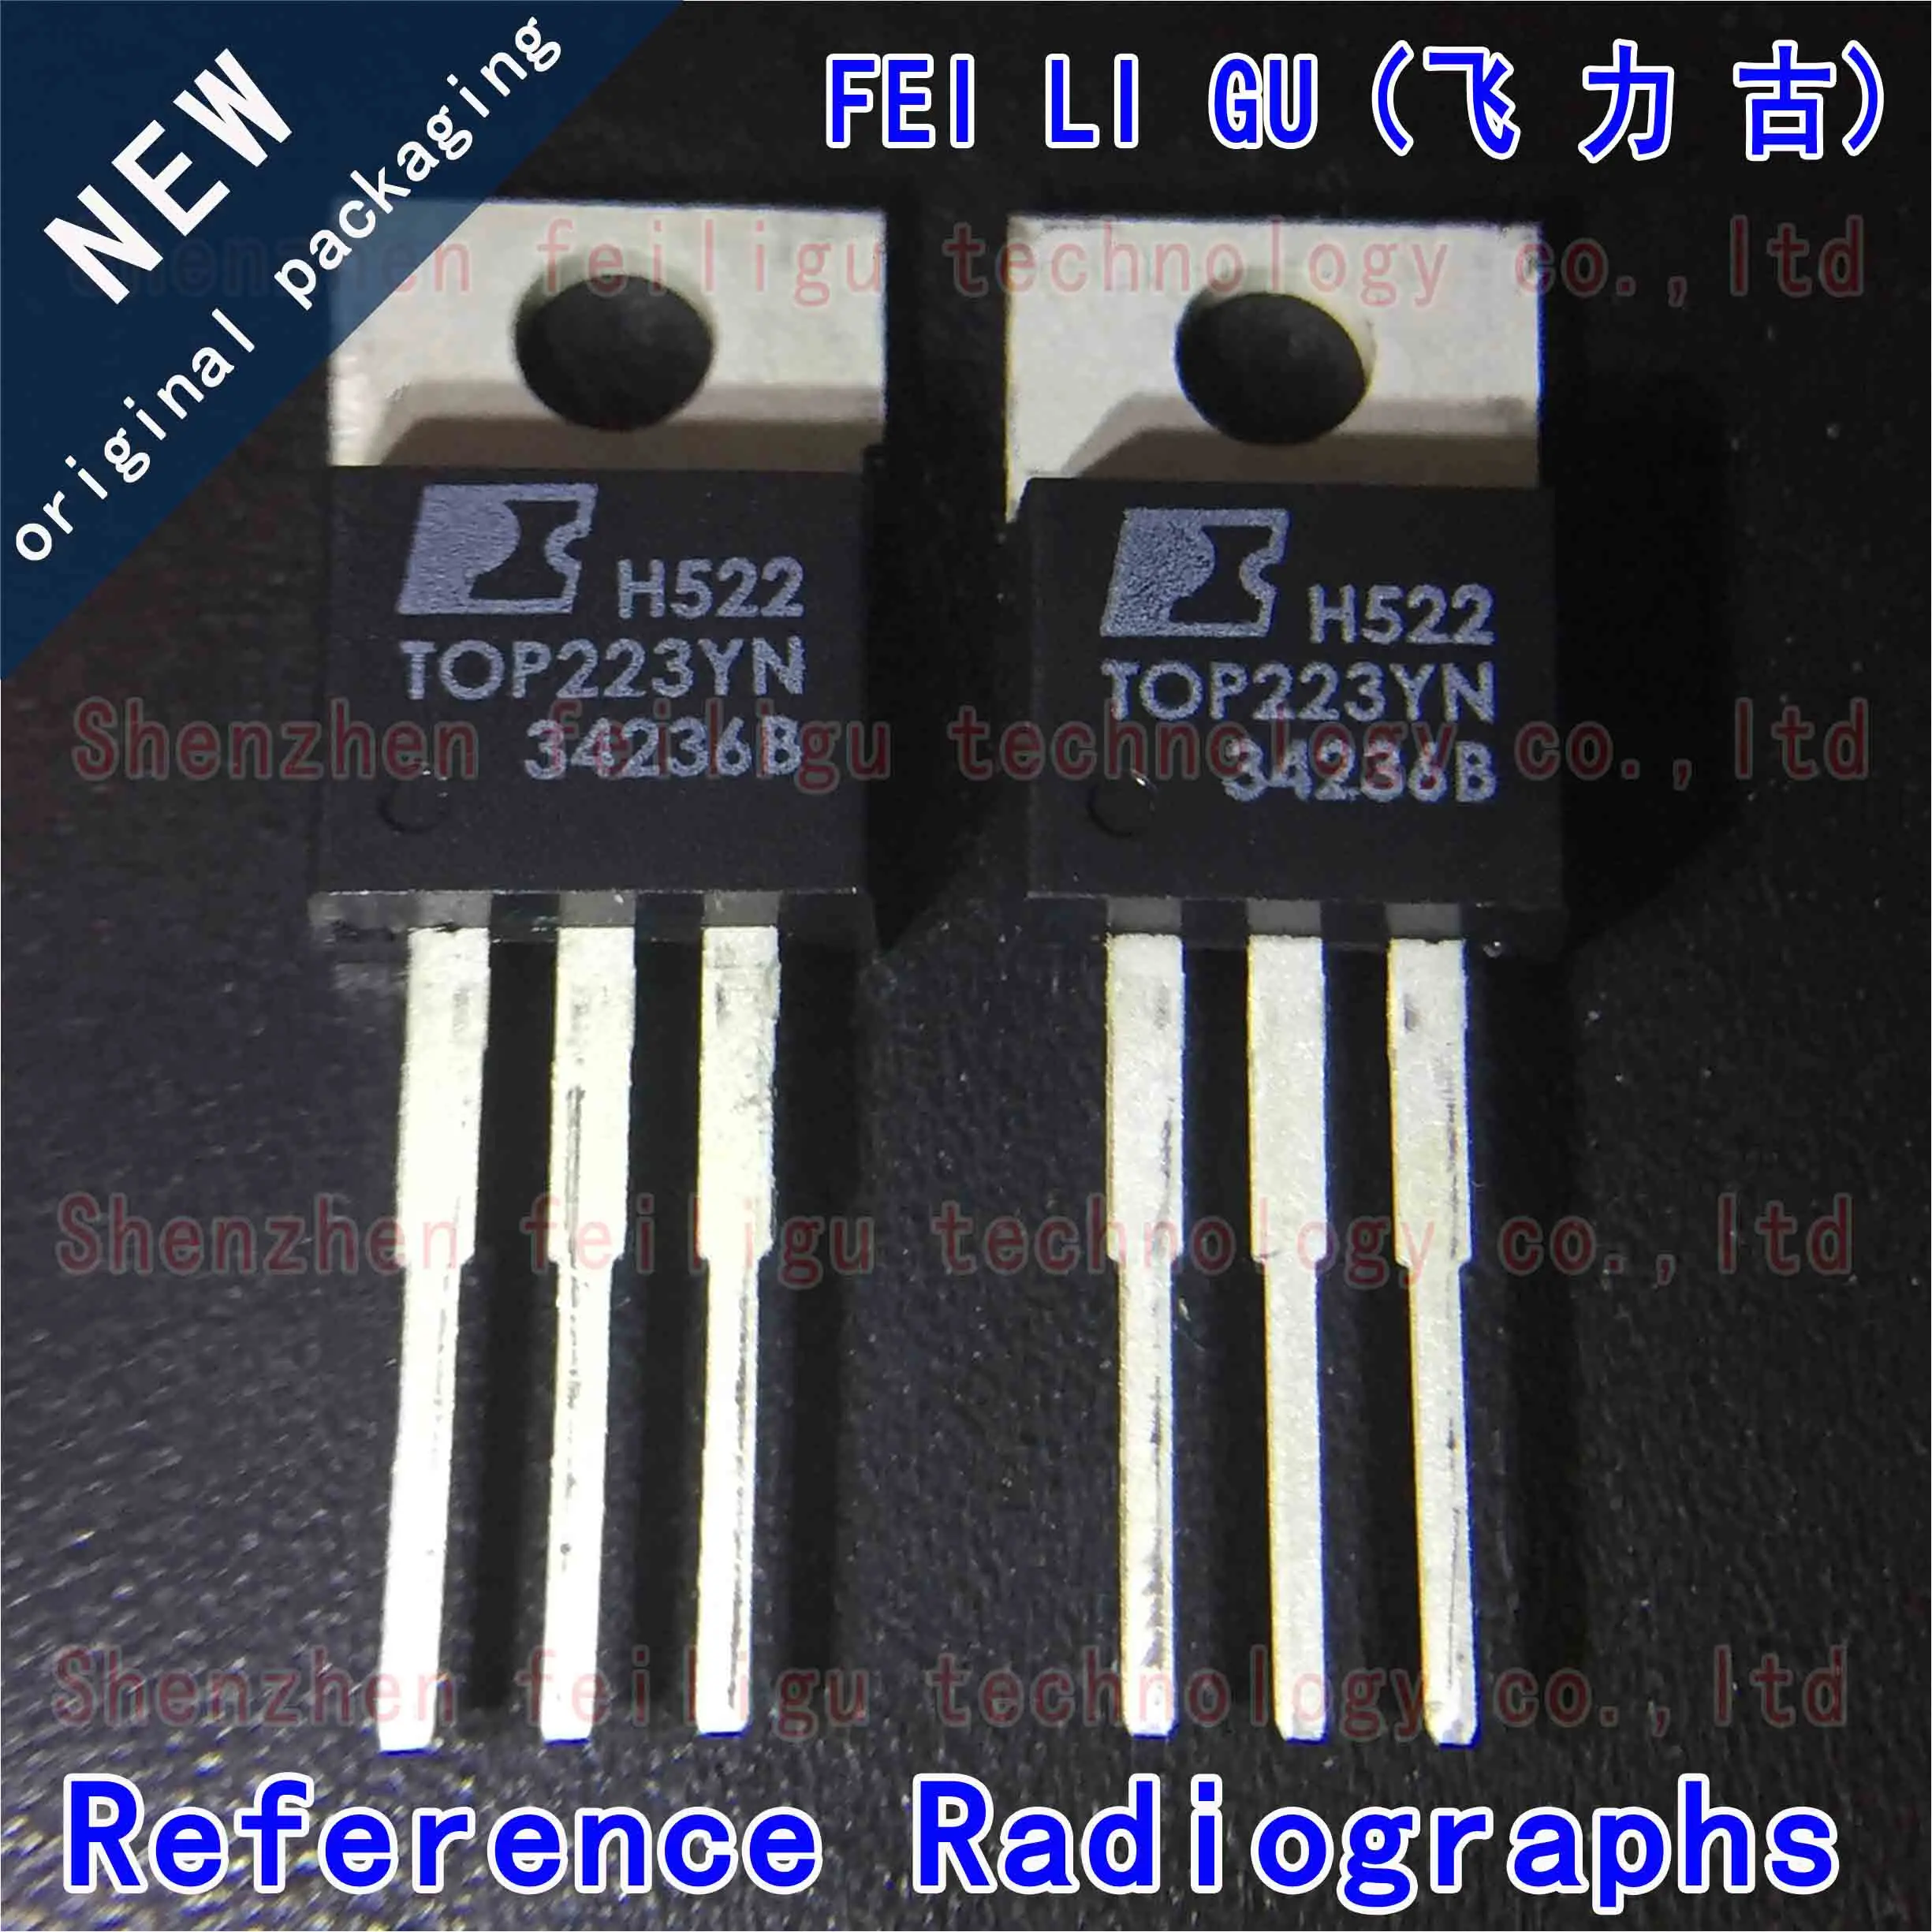 

1~30PCS 100% New original TOP223YN TOP223 package:TO-220 plug AC-DC controller voltage regulator power management chip